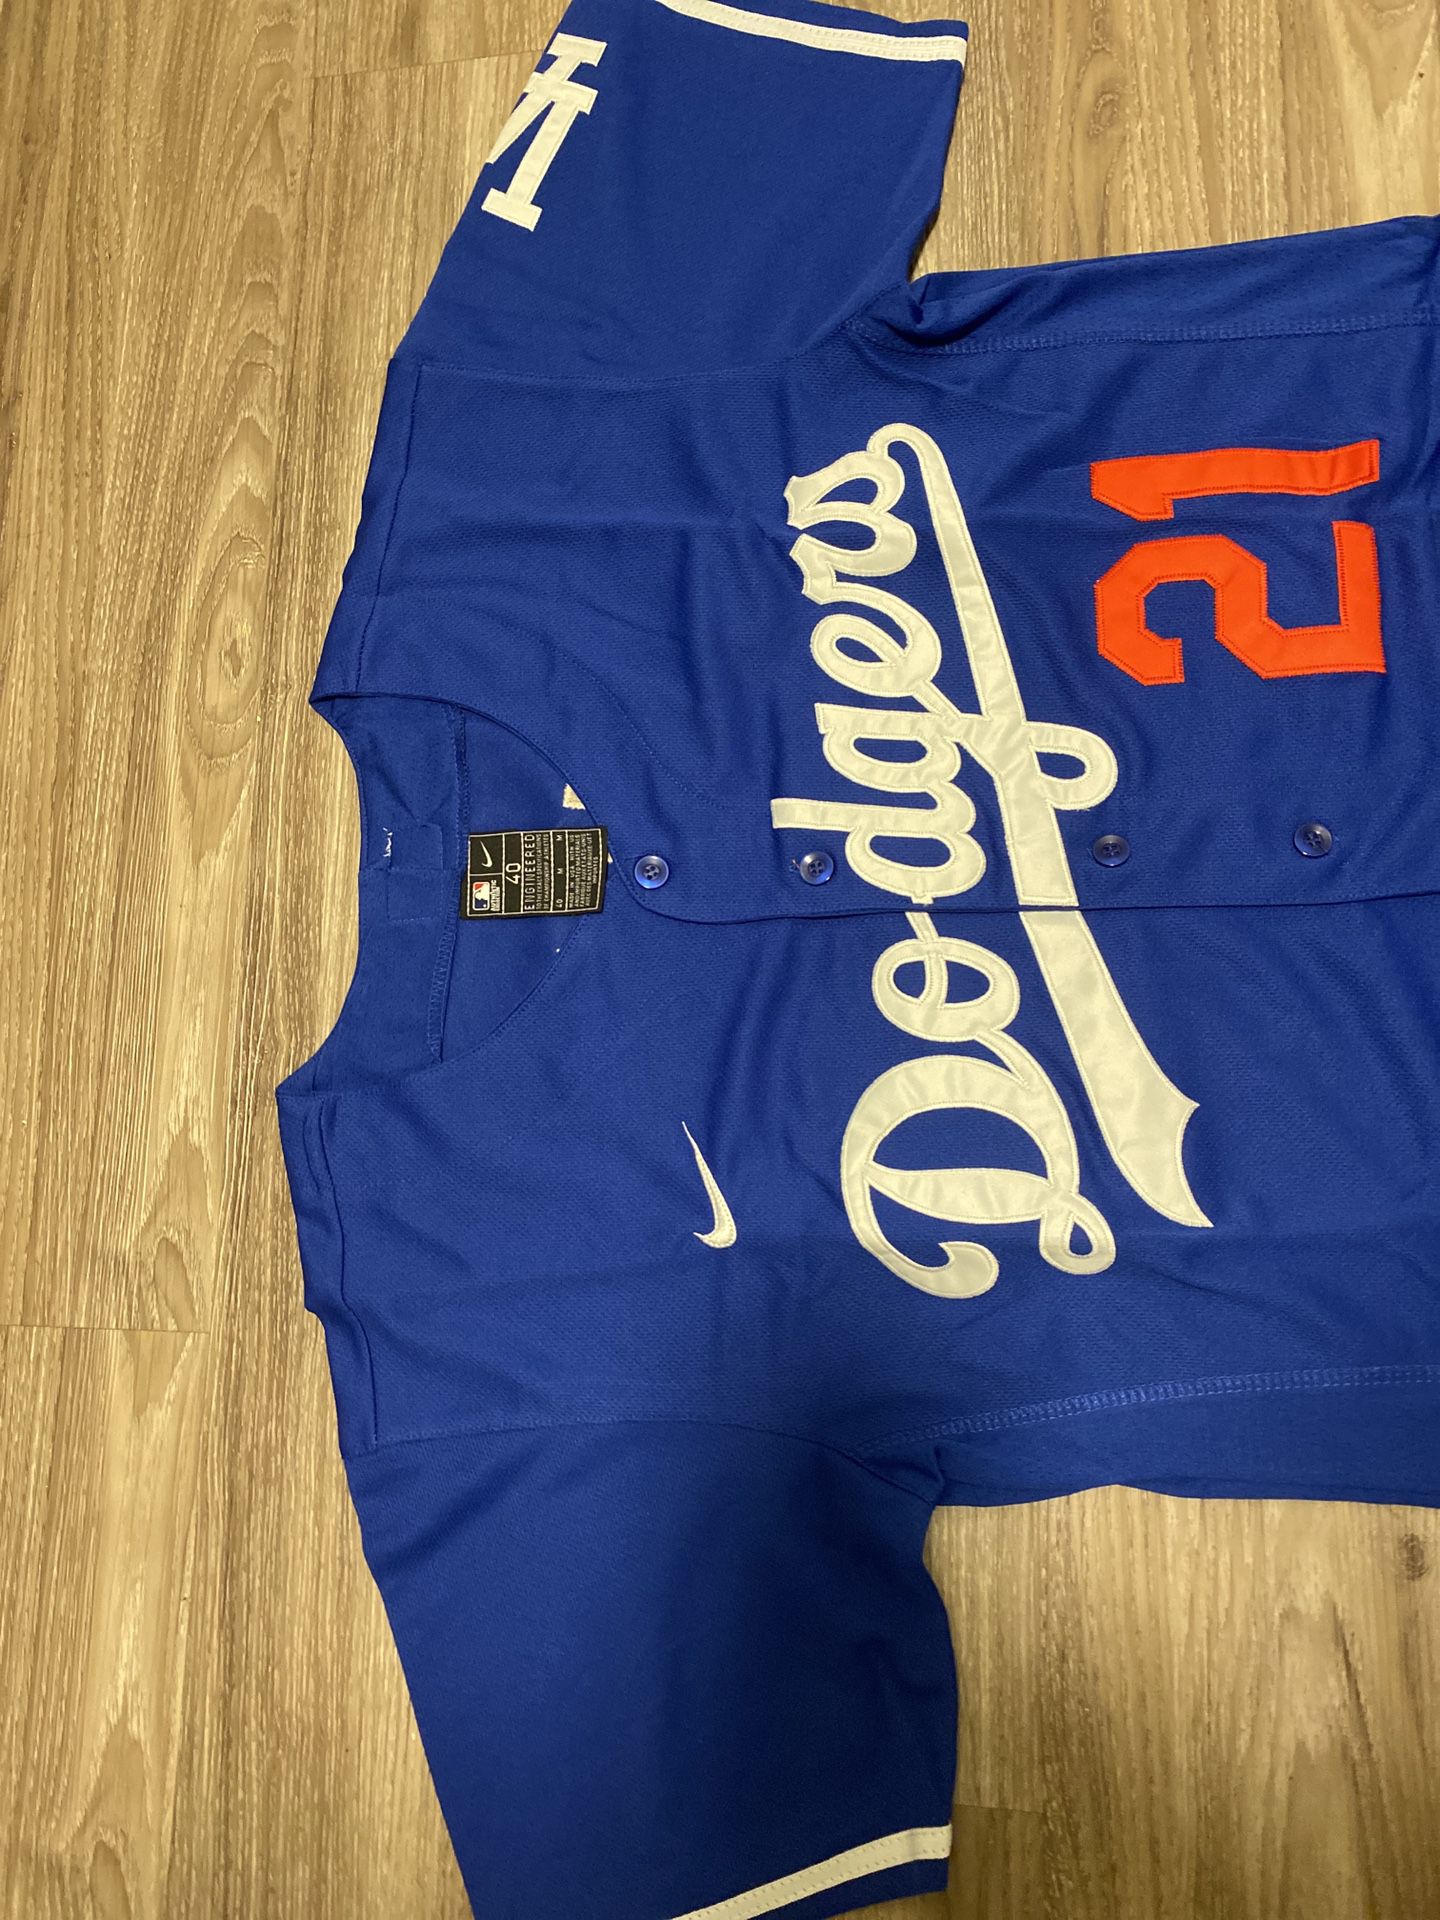 Los Angeles Dodgers Walker Buehler Jersey Adult Size Medium Brand